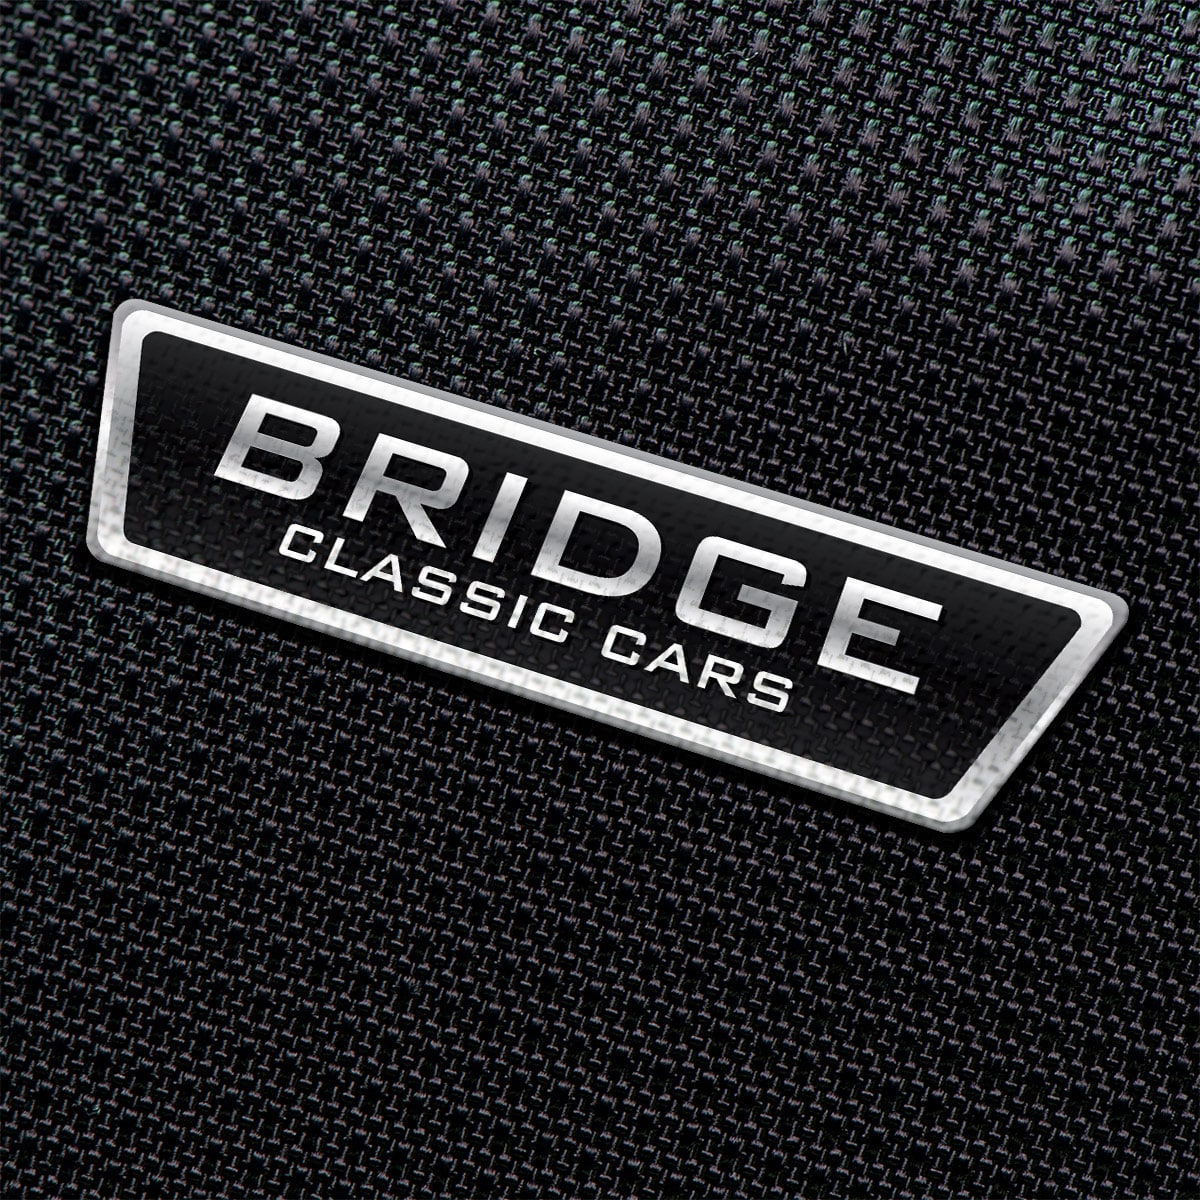 Graphic and Website design for Bridge Classic Cars